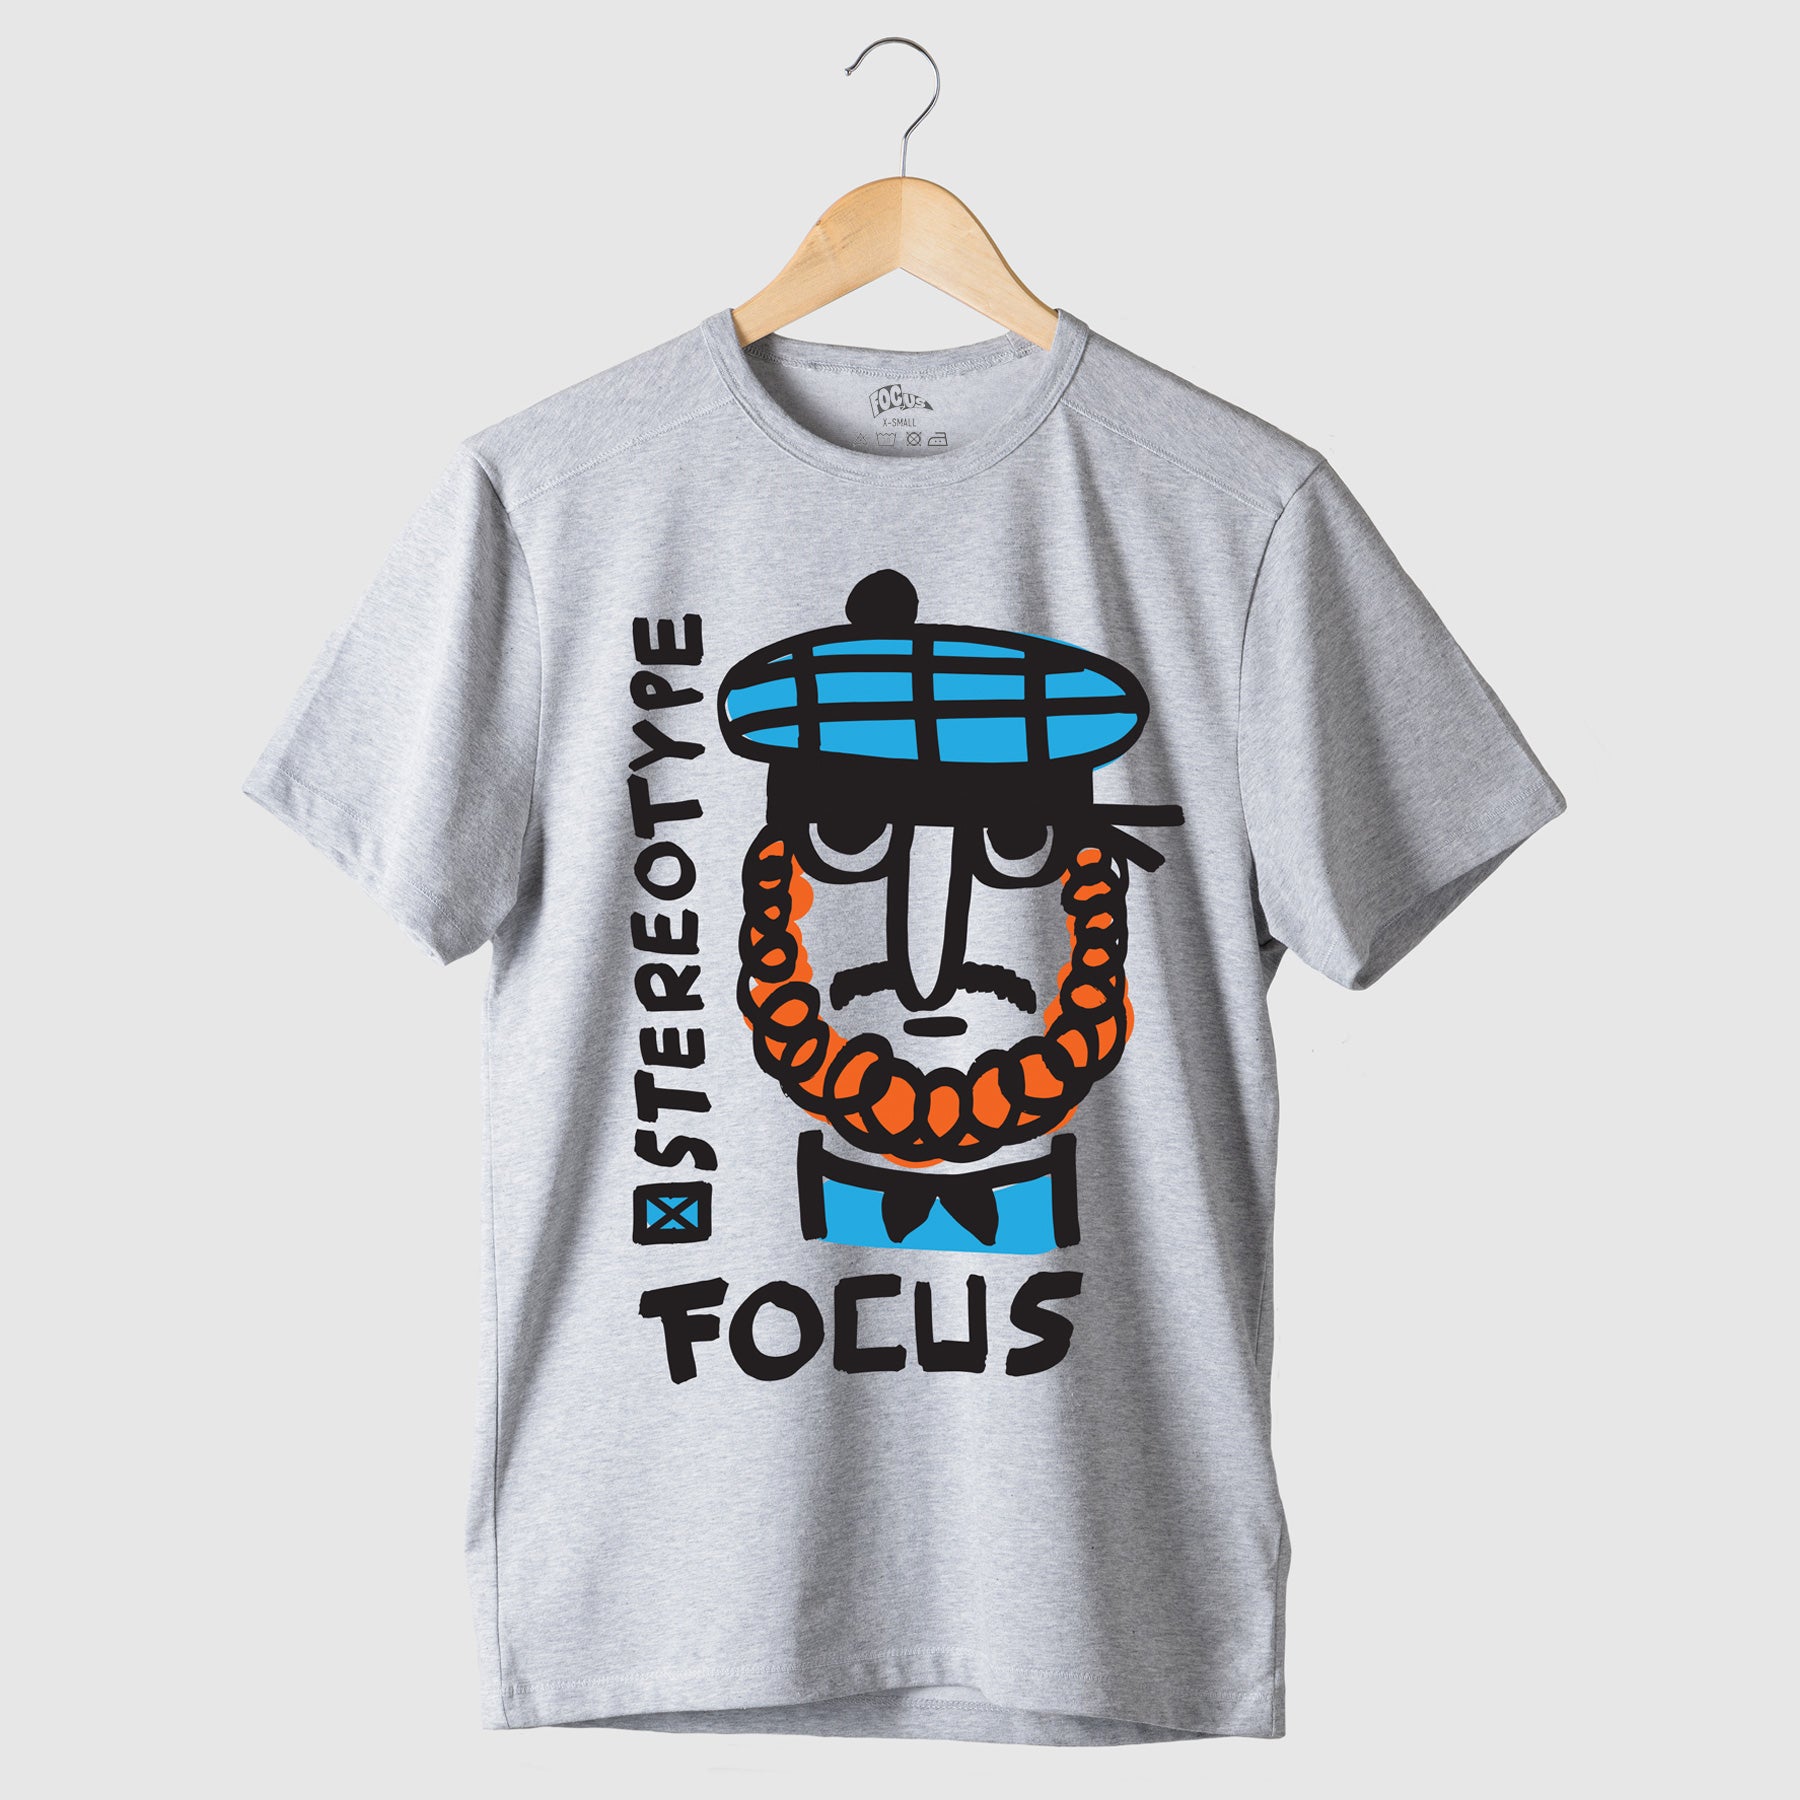 Focus Stereotype T-shirt - Sport Grey